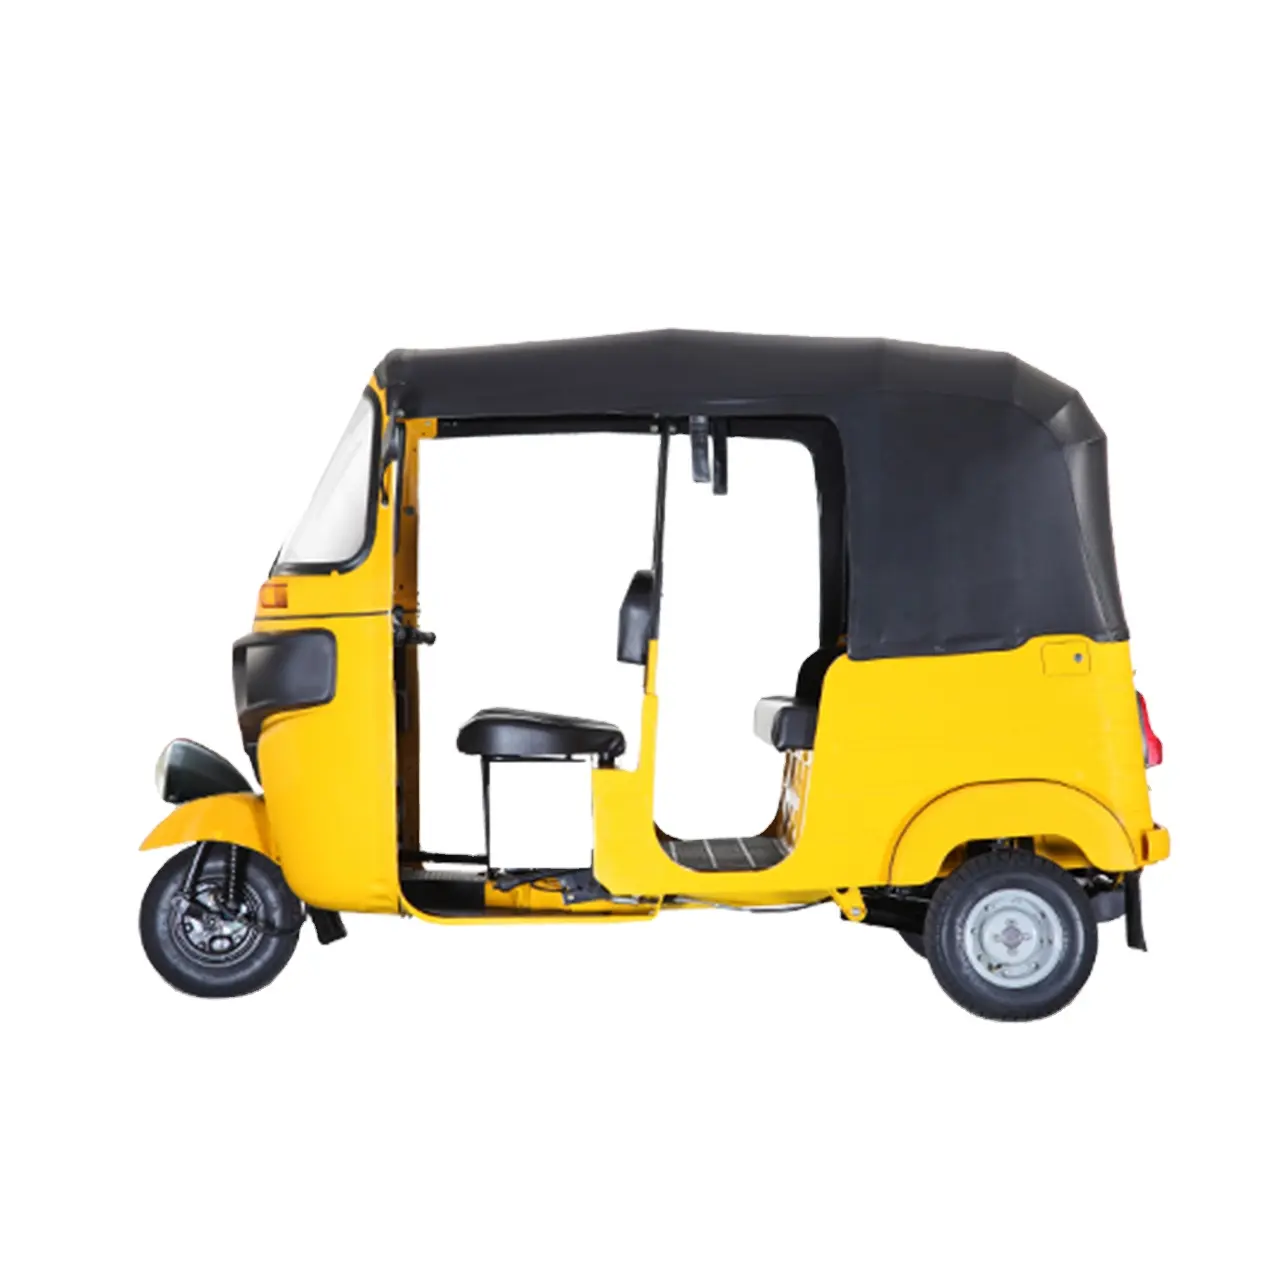 Fast selling Three wheeler Top cover Canopy Carpa for Bajaj RE Tvs King Ape Tuk Tuks Auto rickshaws Motorised Tricycle